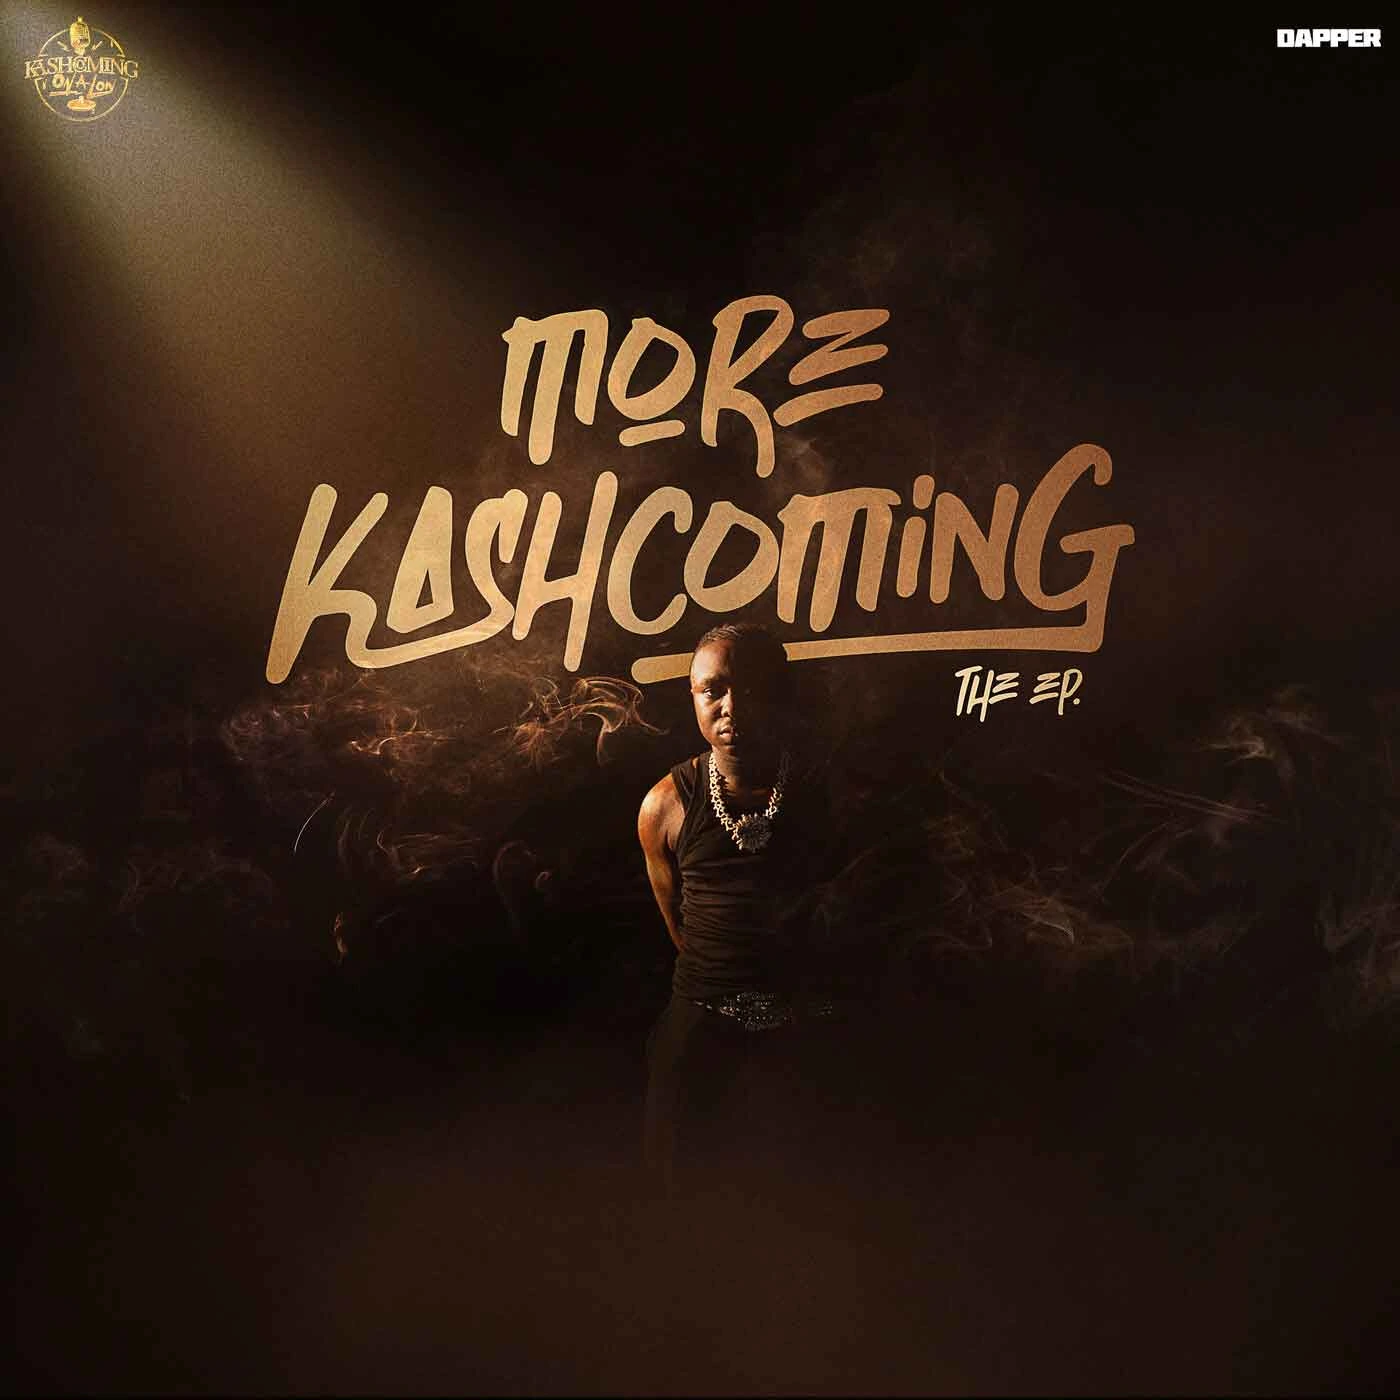 MUSIC: Kashcoming ft. Zerrydl – Casa